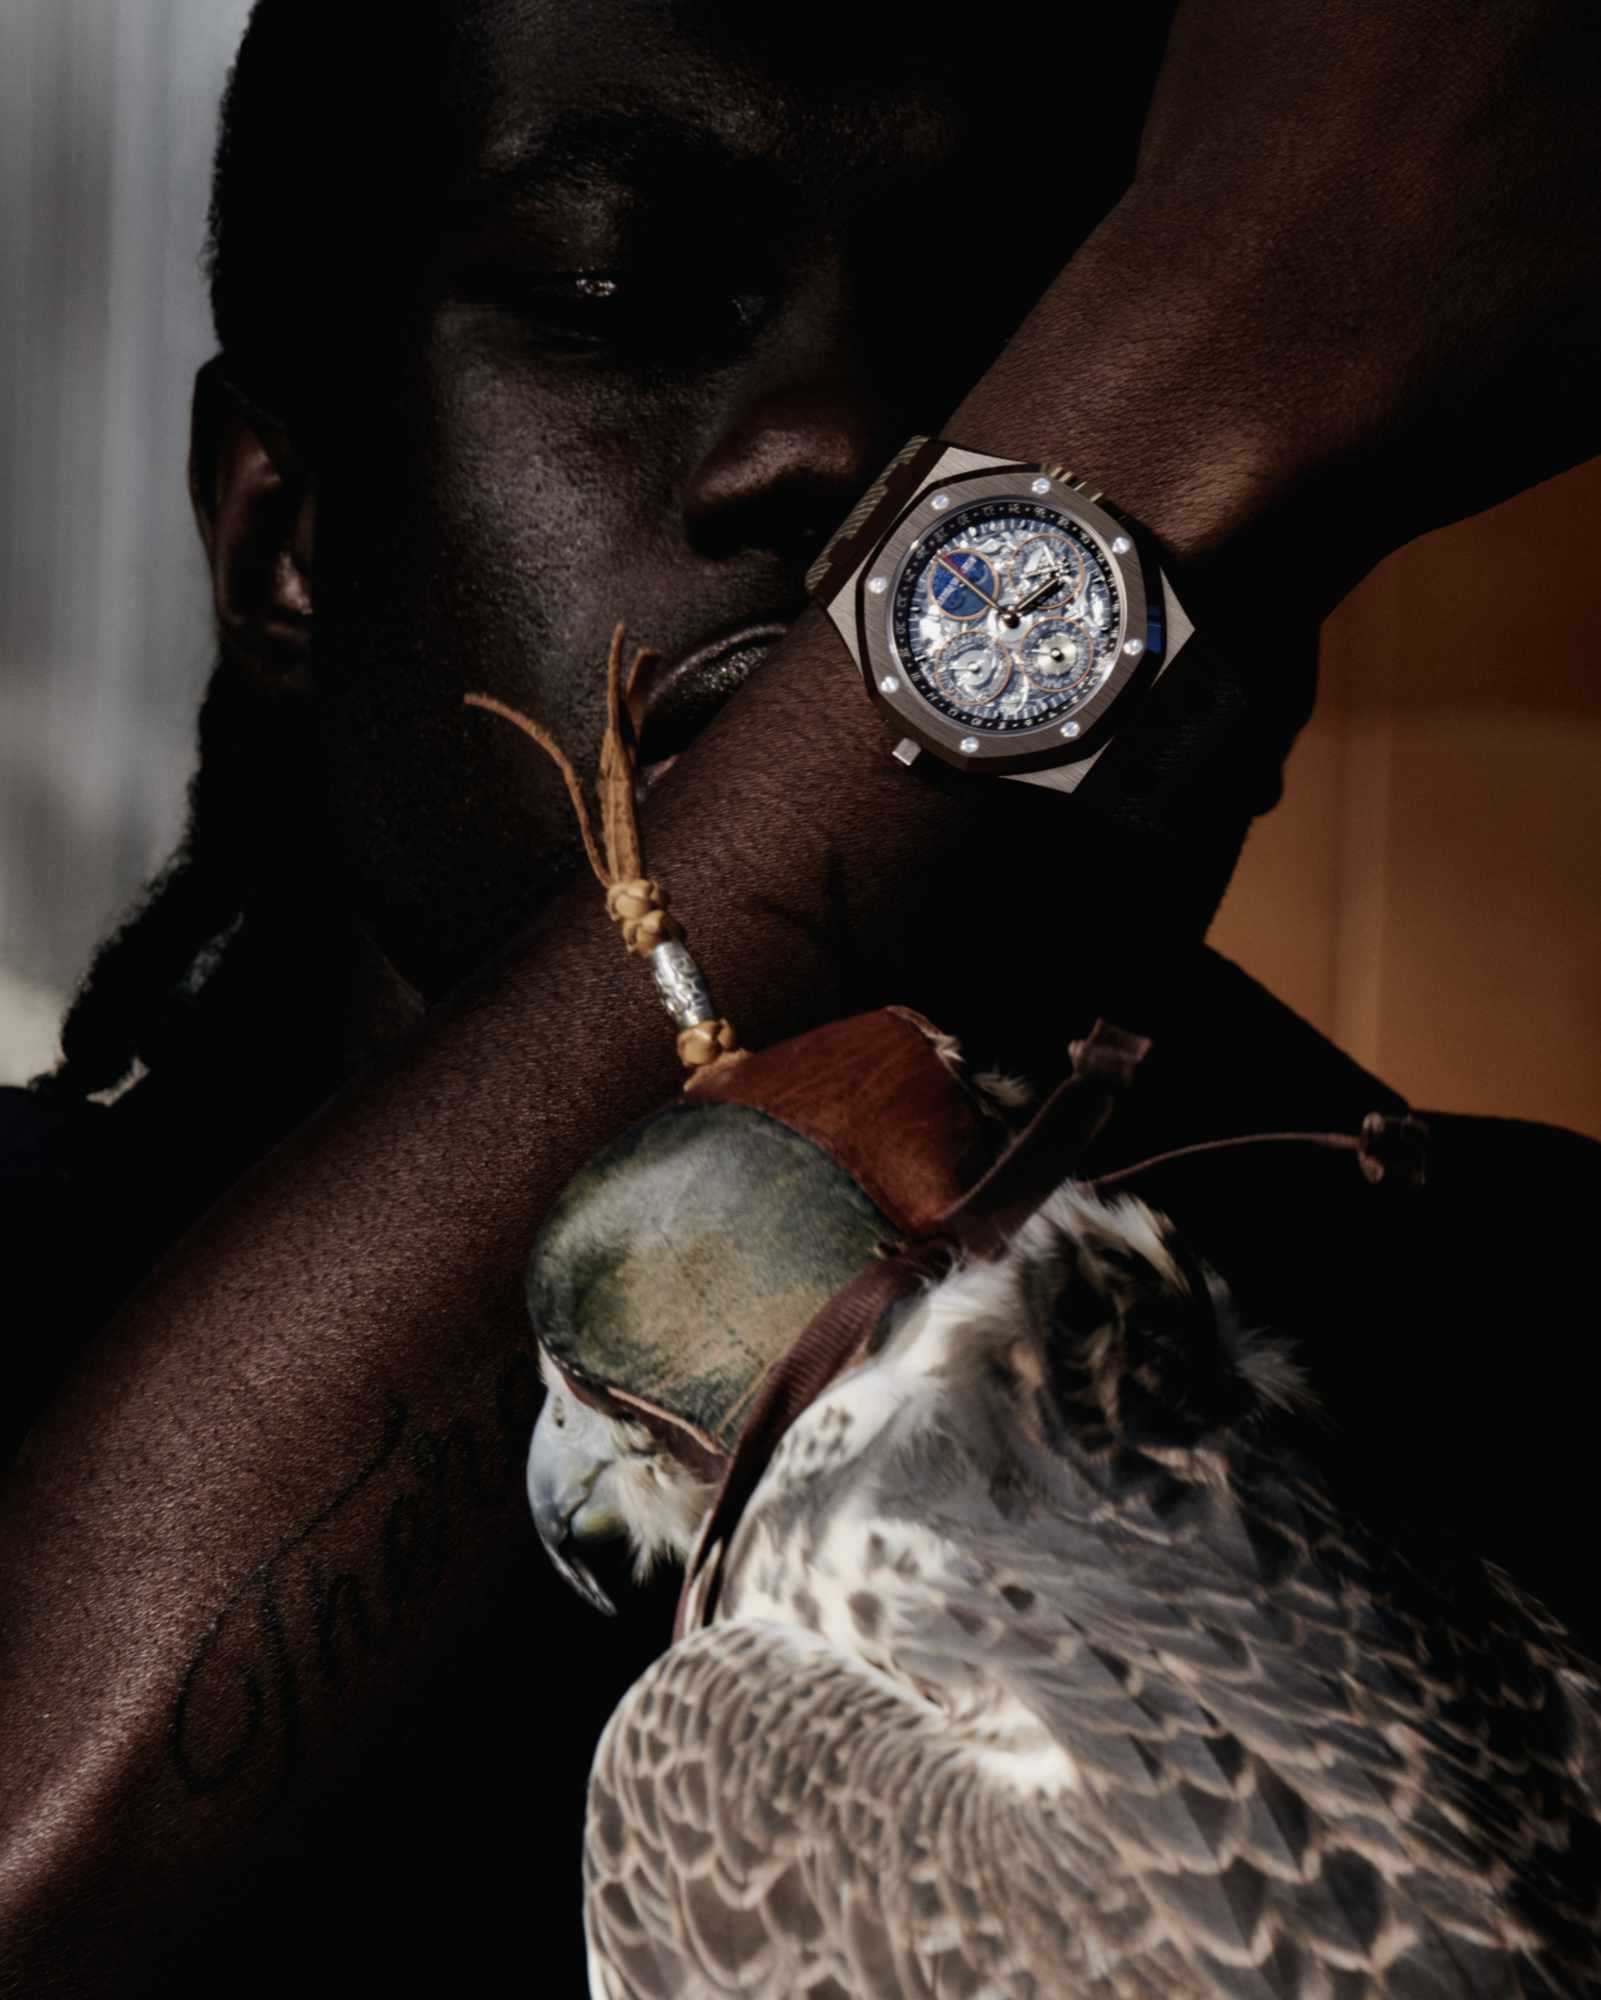 Travis Scott wears his collaborative Cactus Jack x Audemars Piguet watch